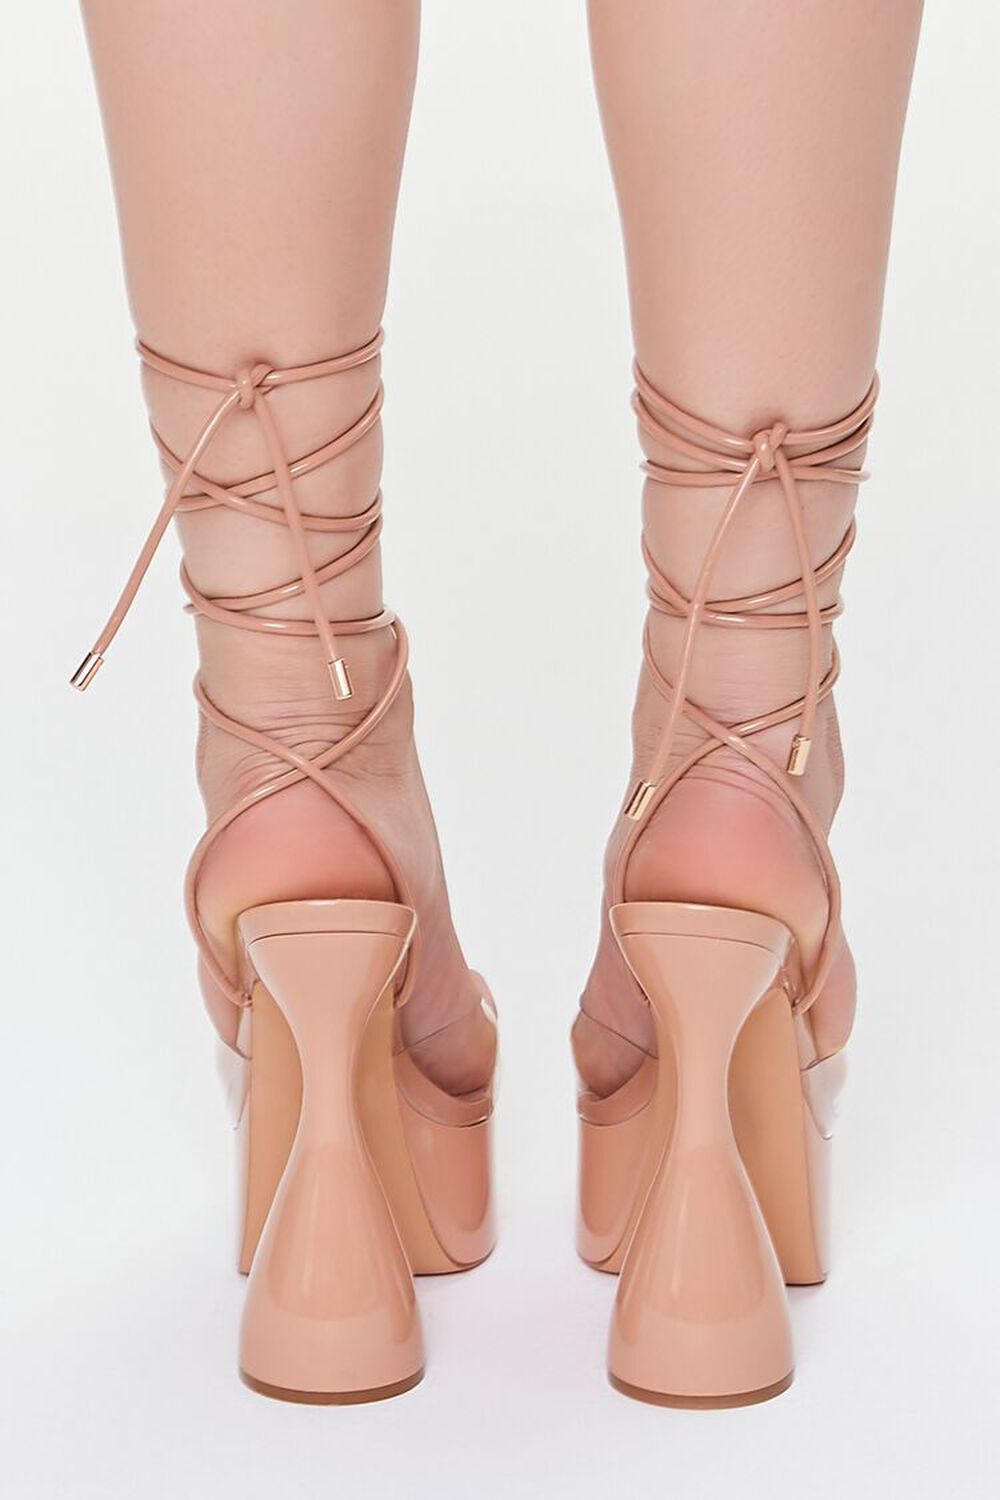 NUDE Wraparound Open-Toe Platform Heels, image 3